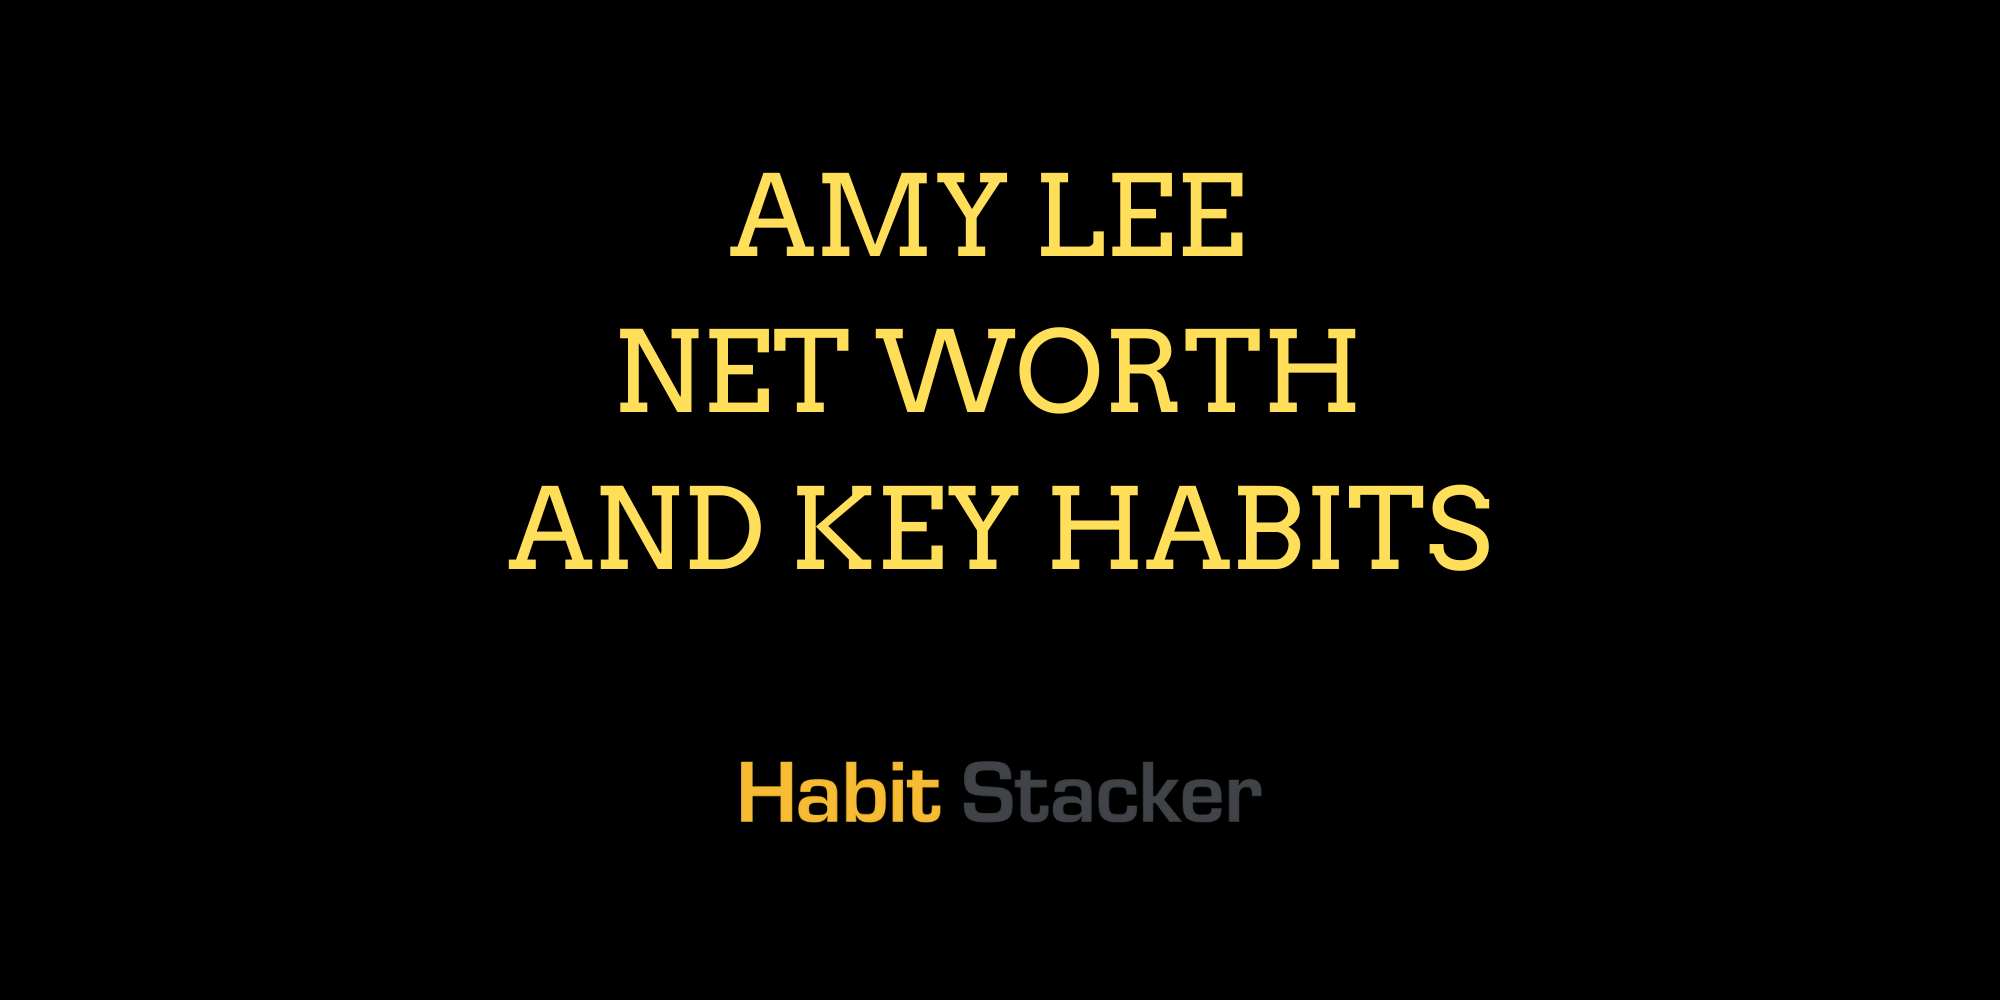 Amy Lee Net Worth and Key Habits